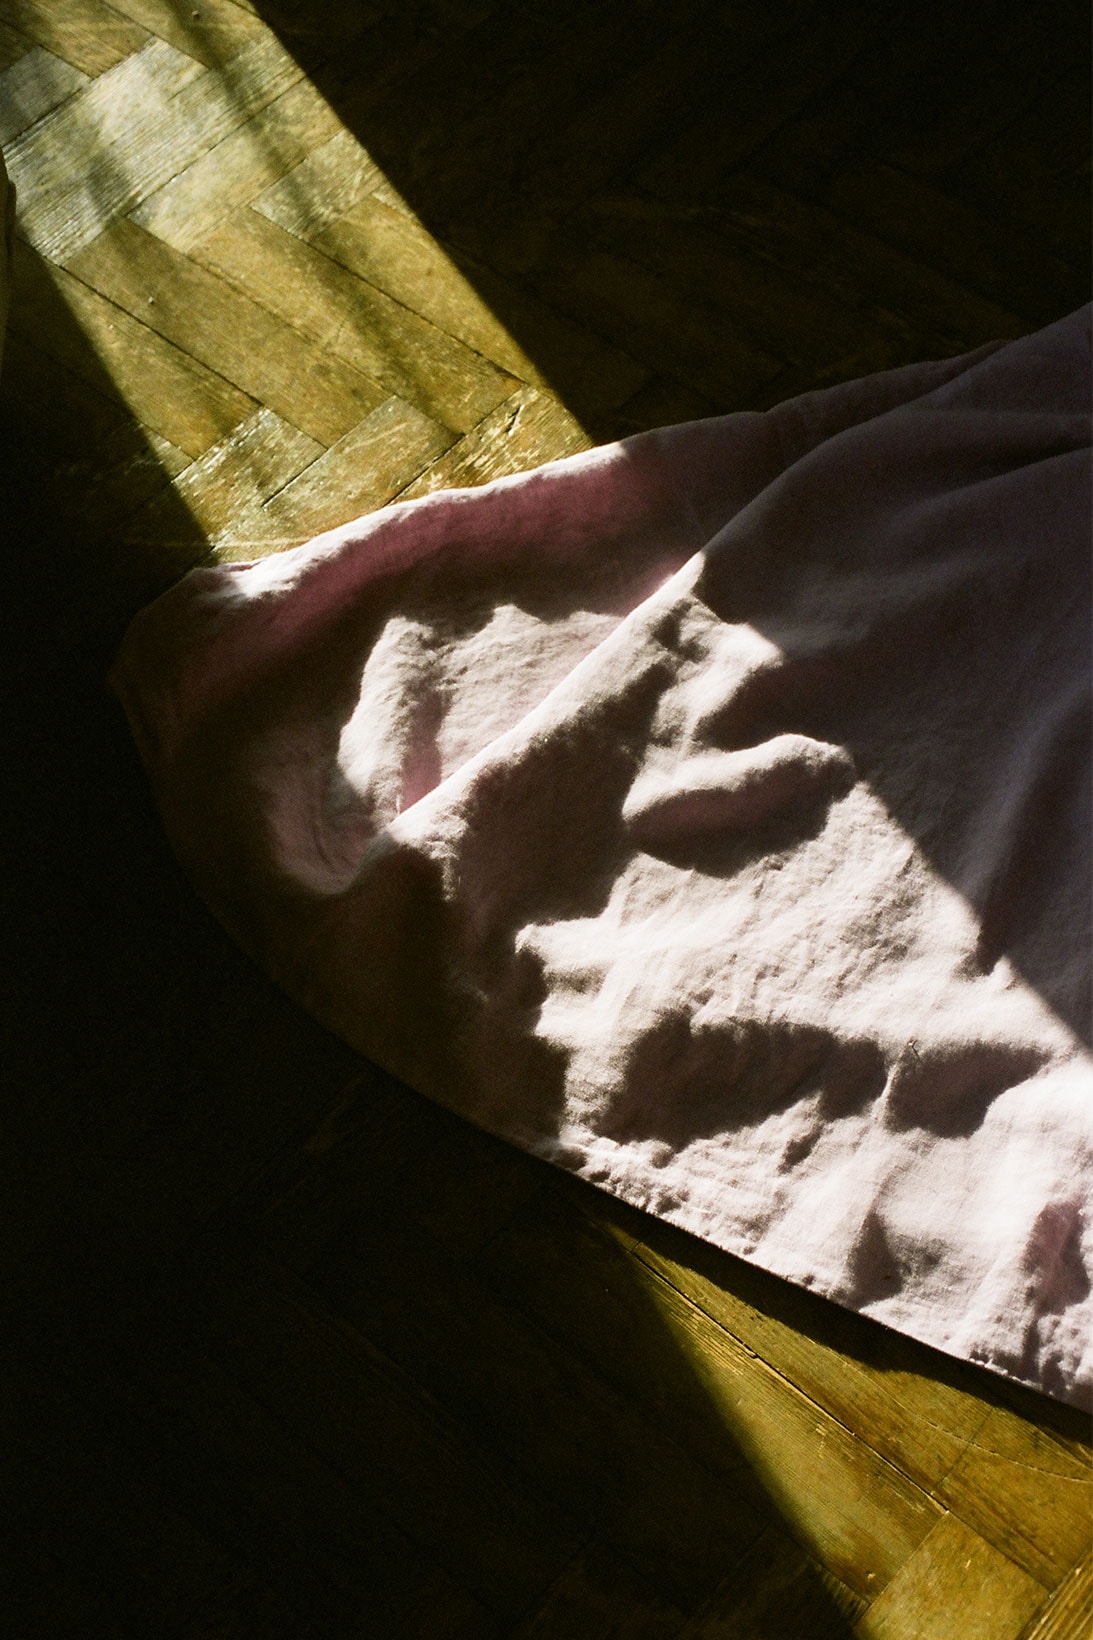 tekla summer linen bedding collection natural sunlight sheets